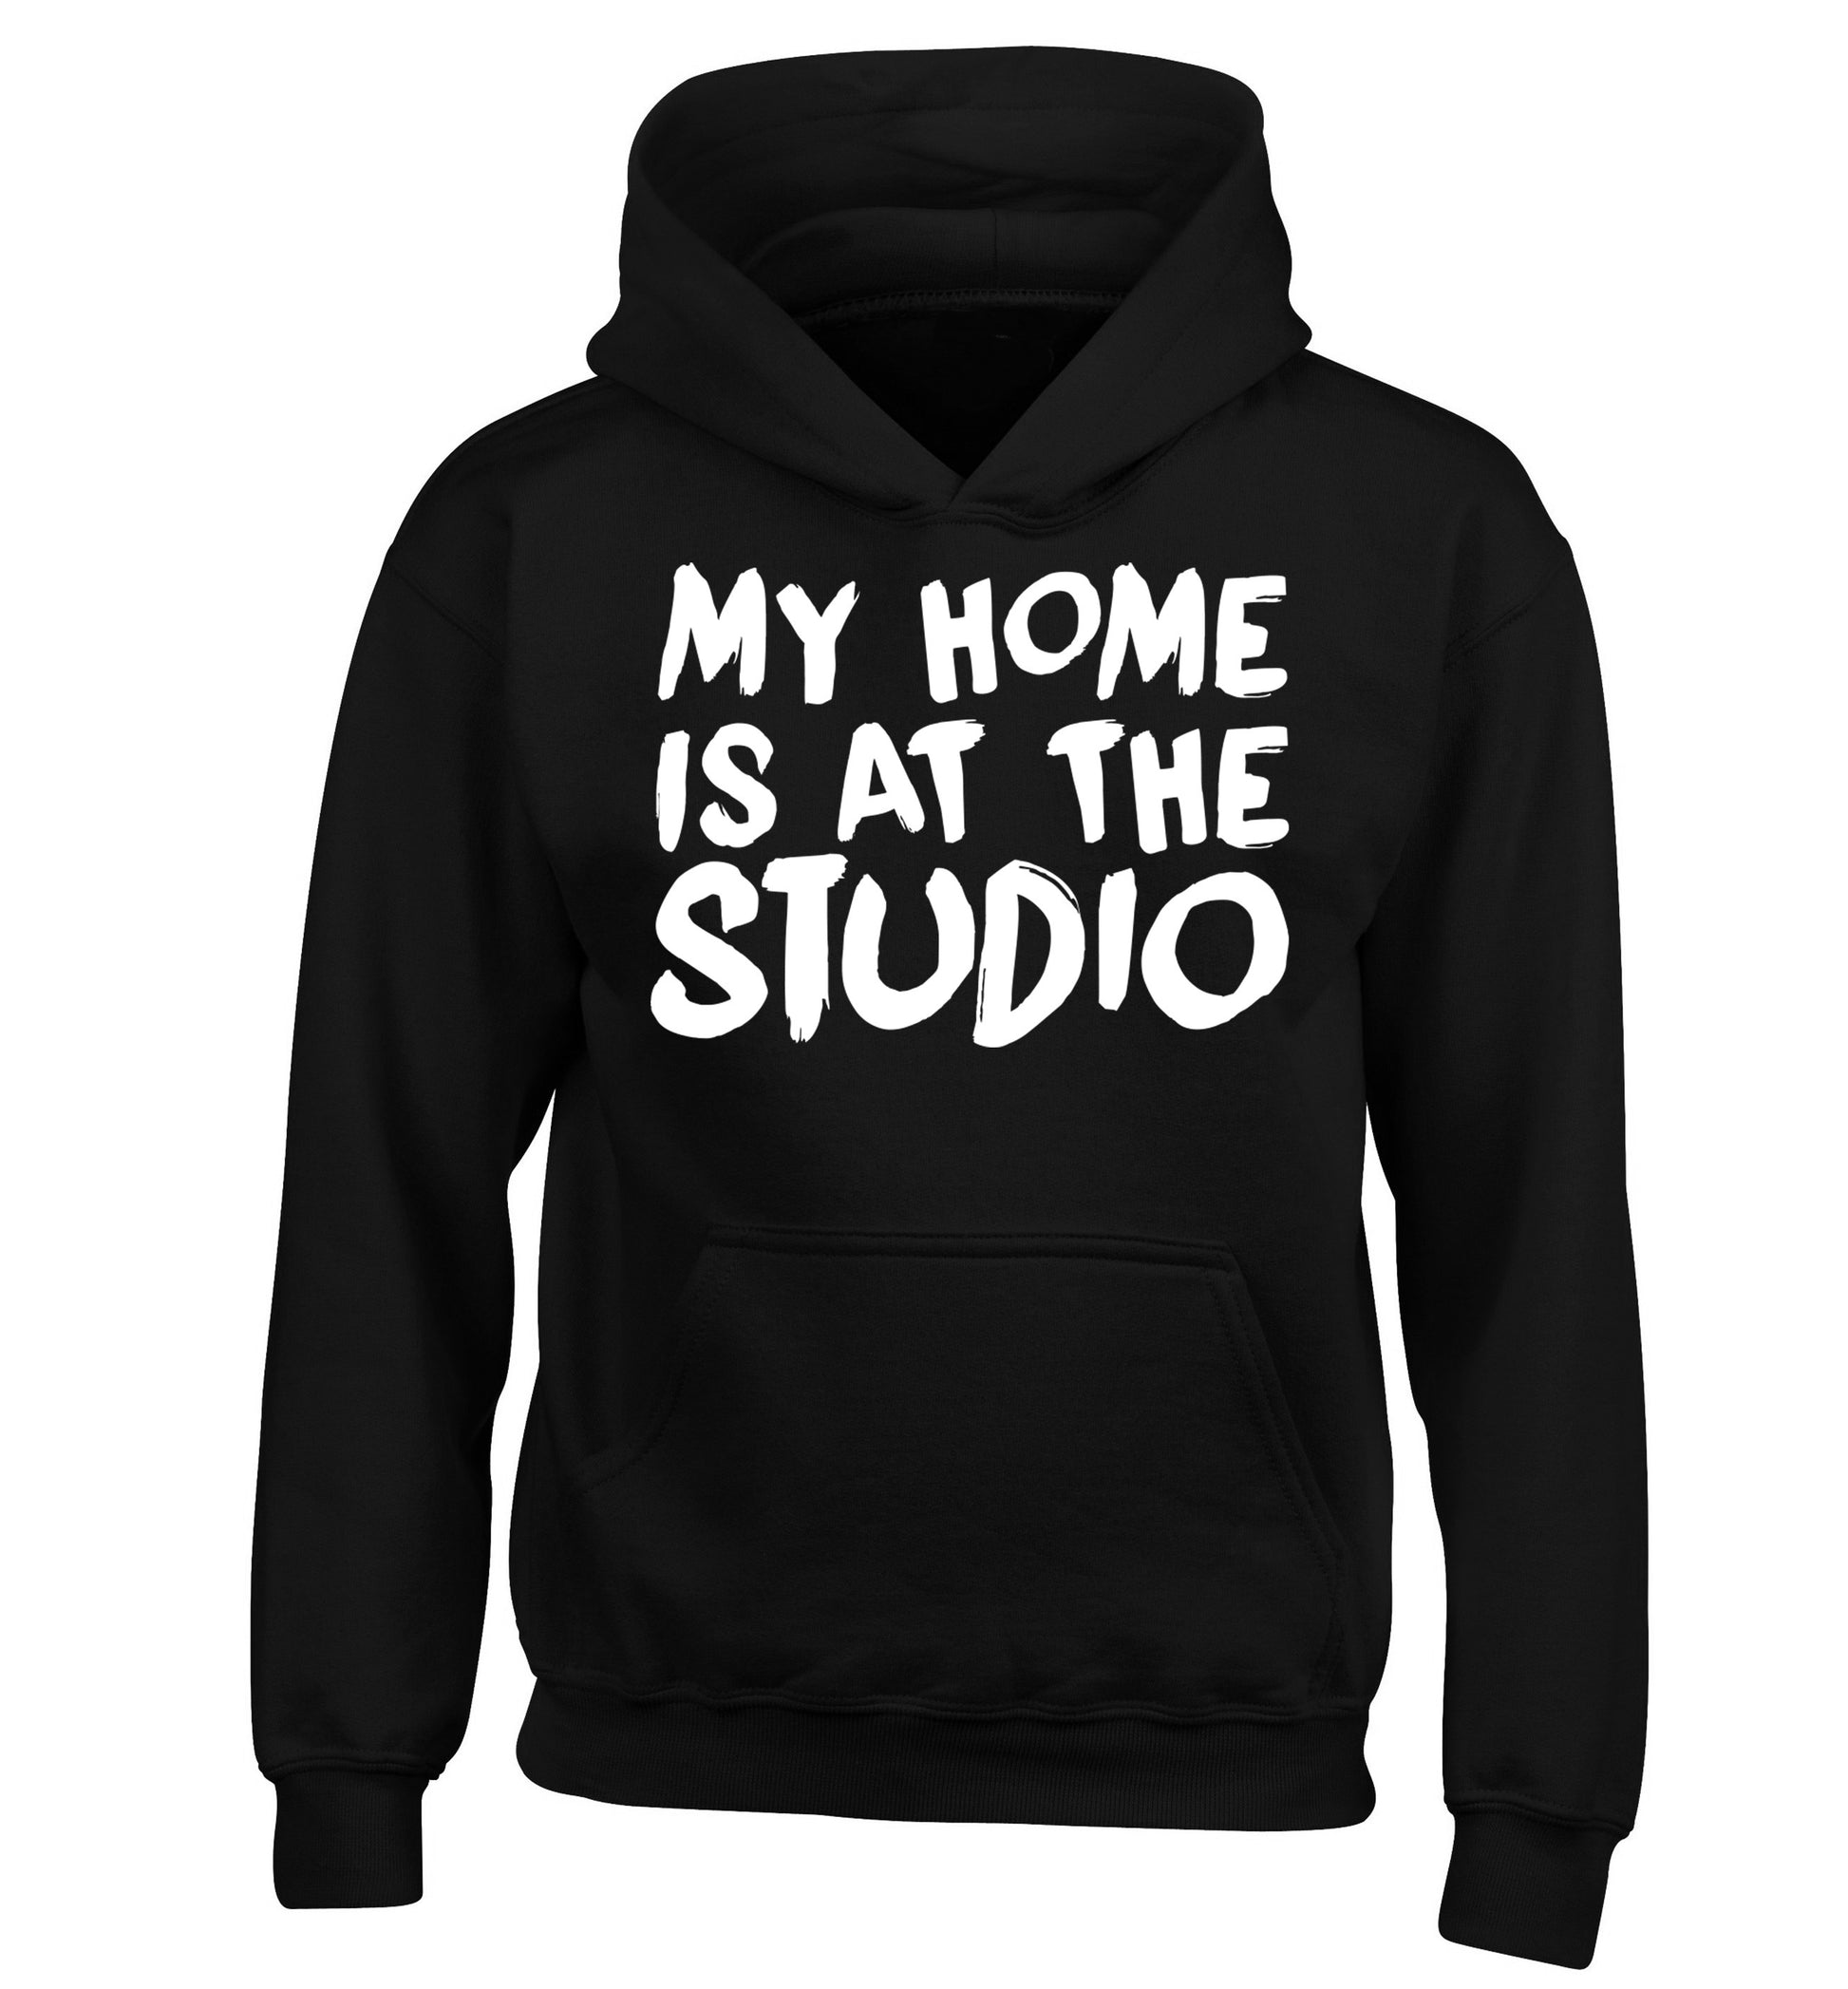 My home is at the studio children's black hoodie 12-14 Years